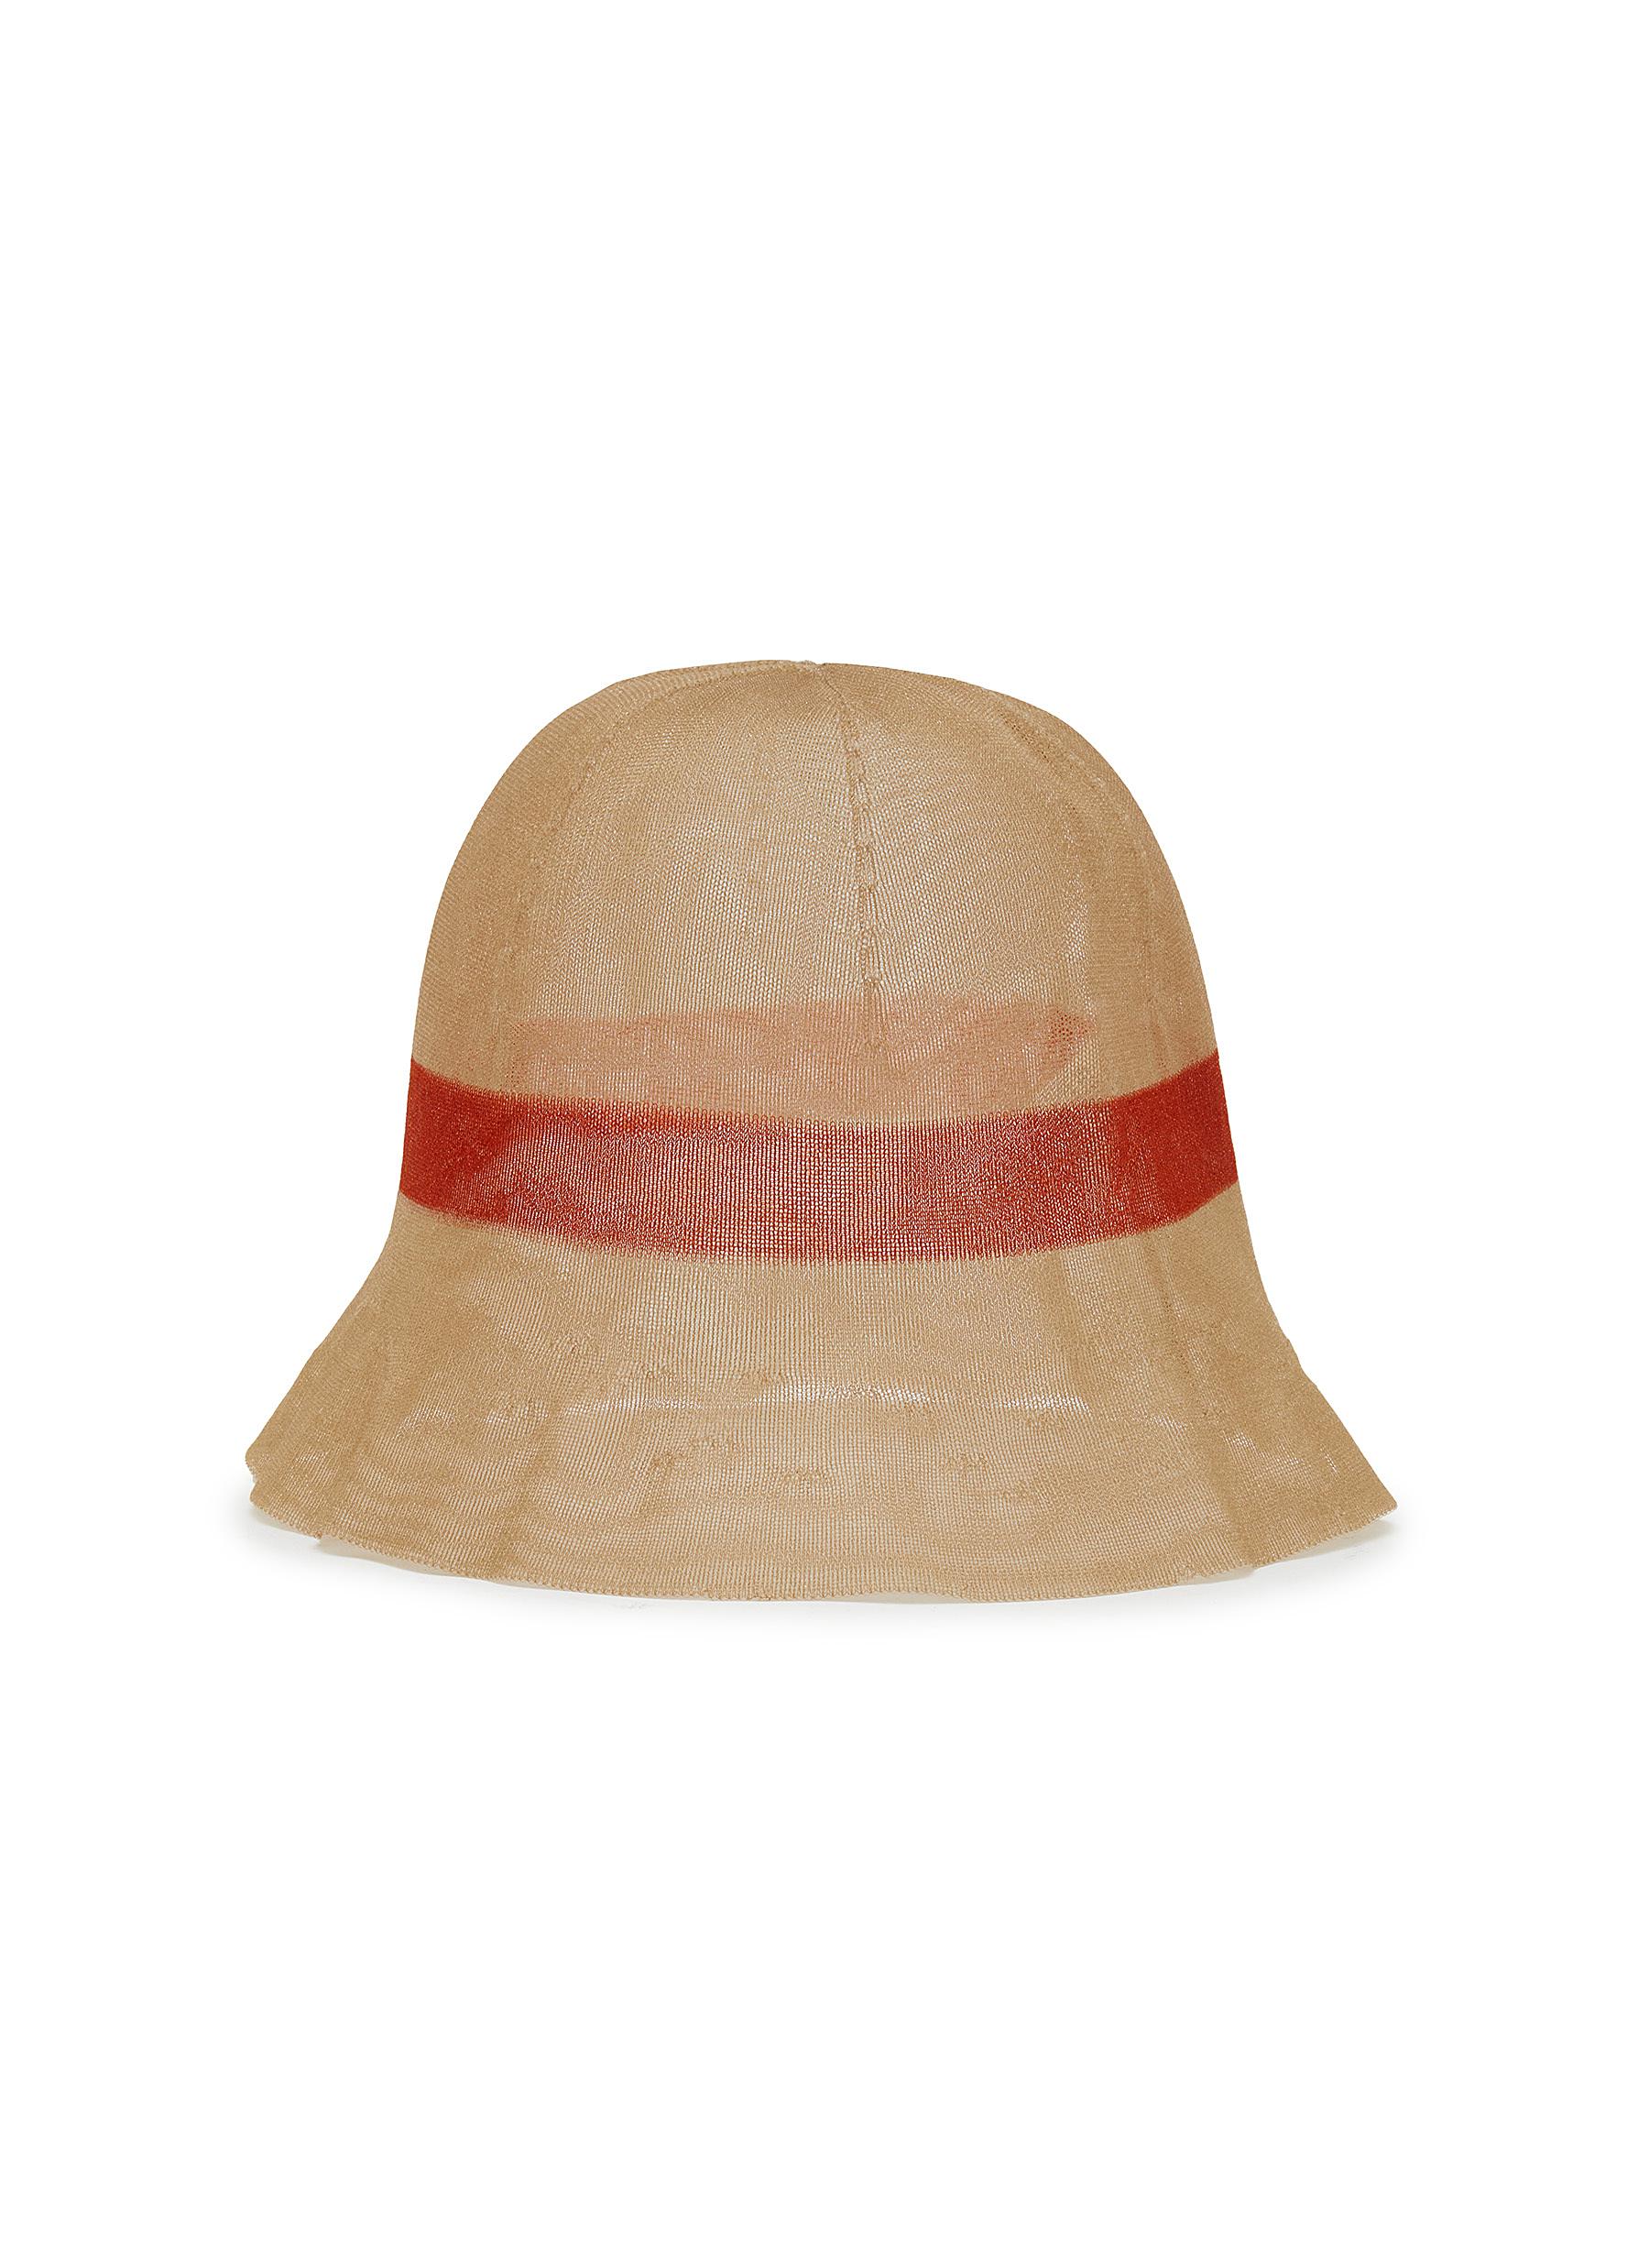 THE ROW, Indo Hat, Women